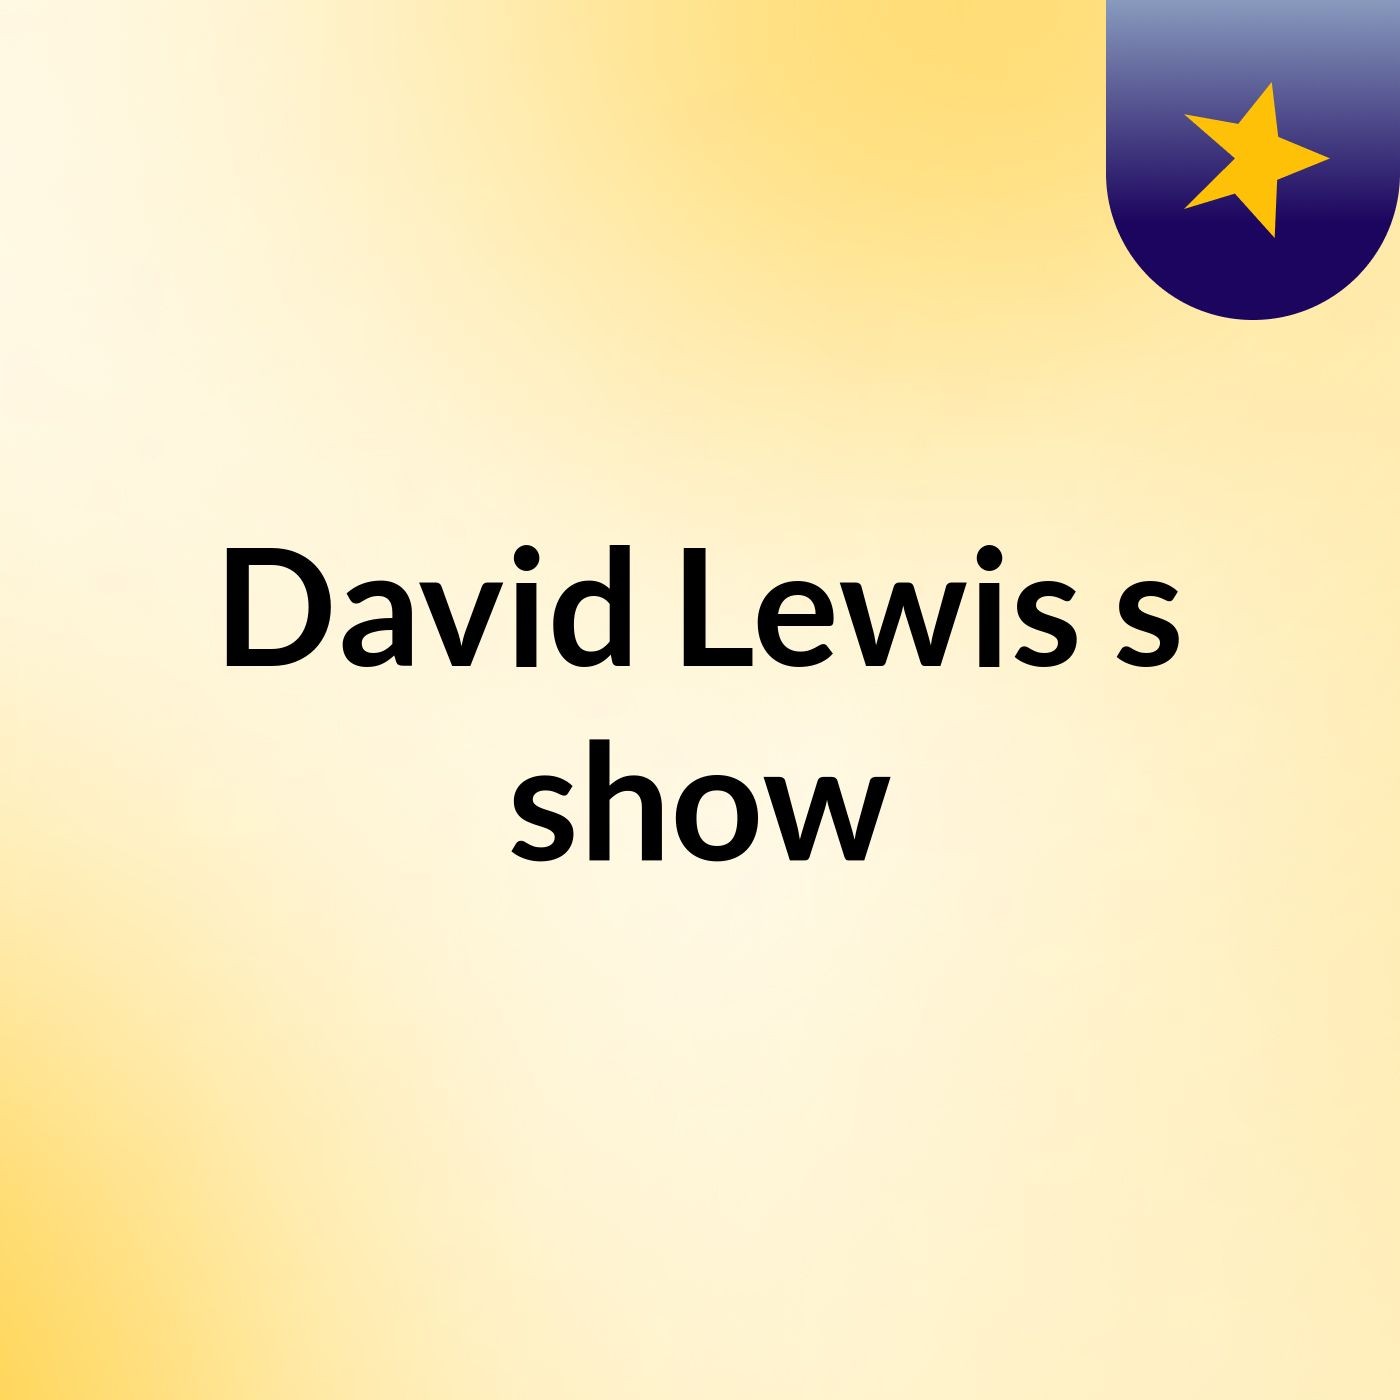 David Lewis's show